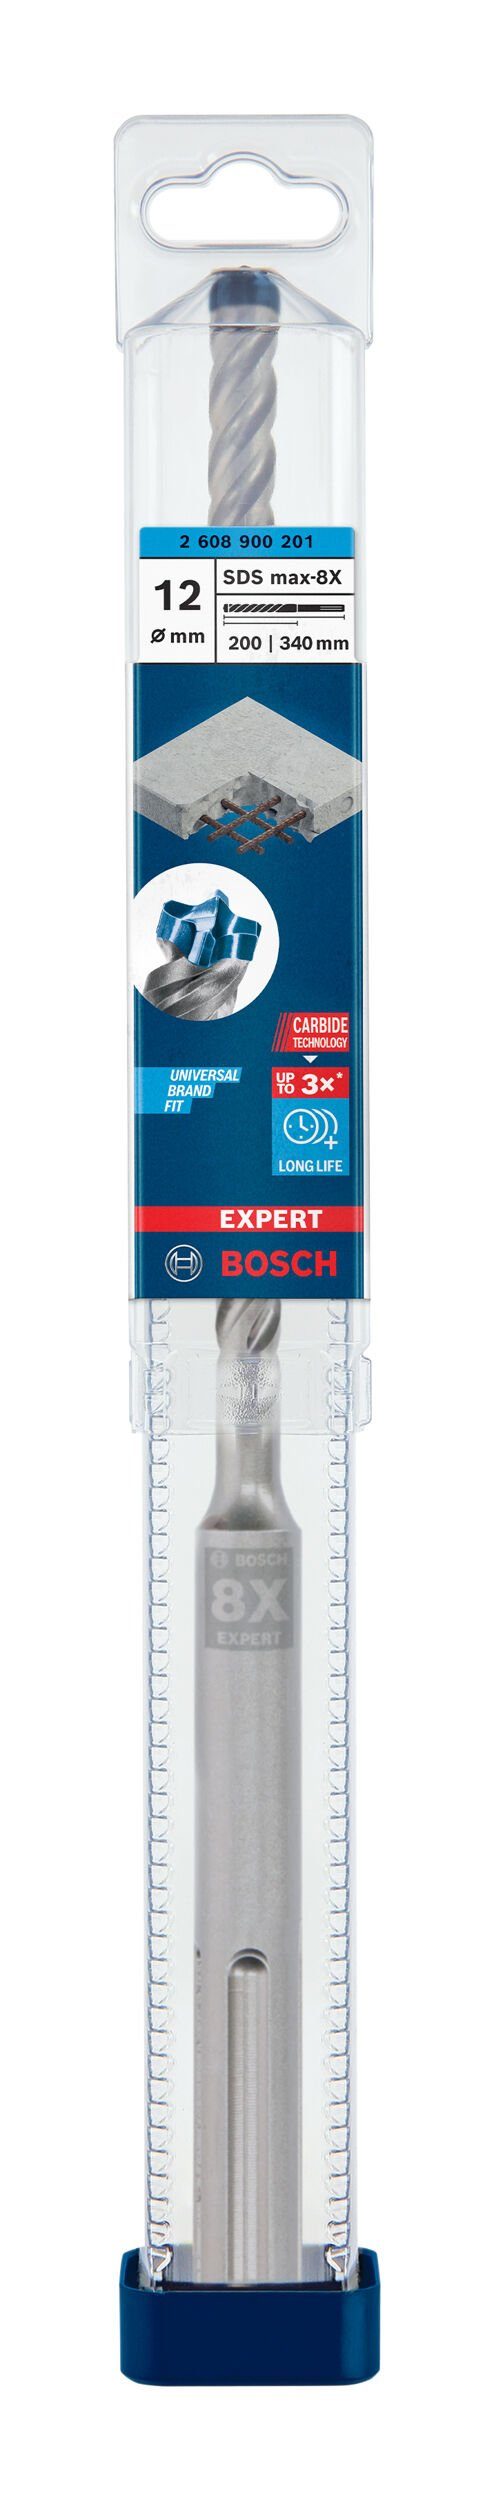 Universalbohrer x BOSCH - 340 200 max-8X, 12 SDS Expert Hammerbohrer x mm